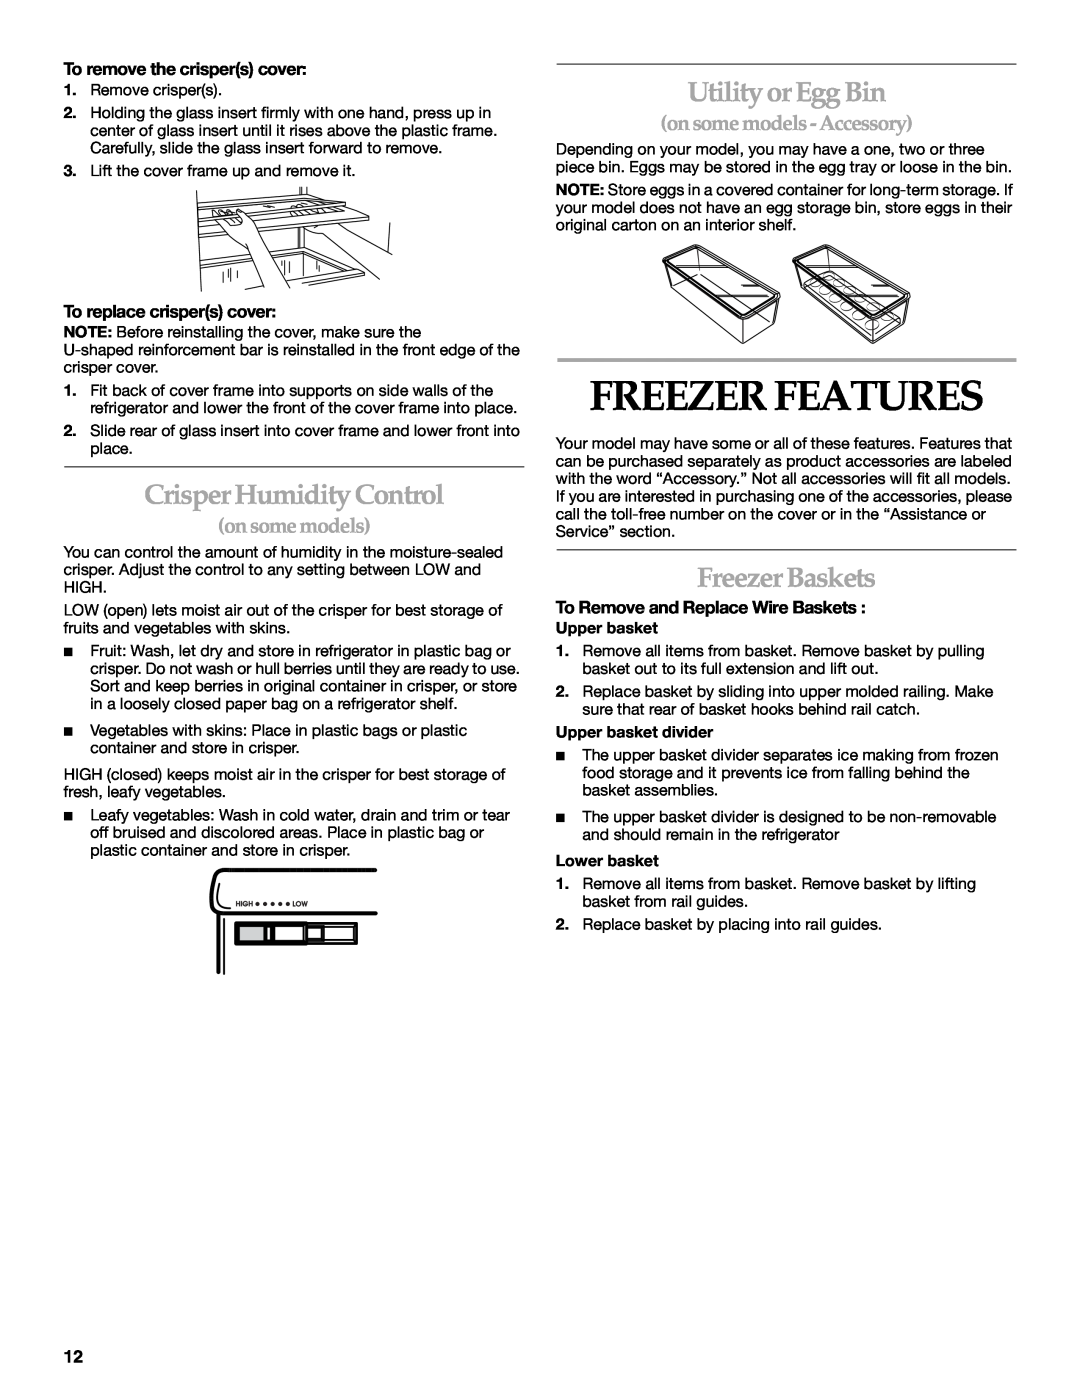 KitchenAid 2225033A manual Freezer Features, Utility or Egg Bin, Crisper Humidity Control, Freezer Baskets, on some models 